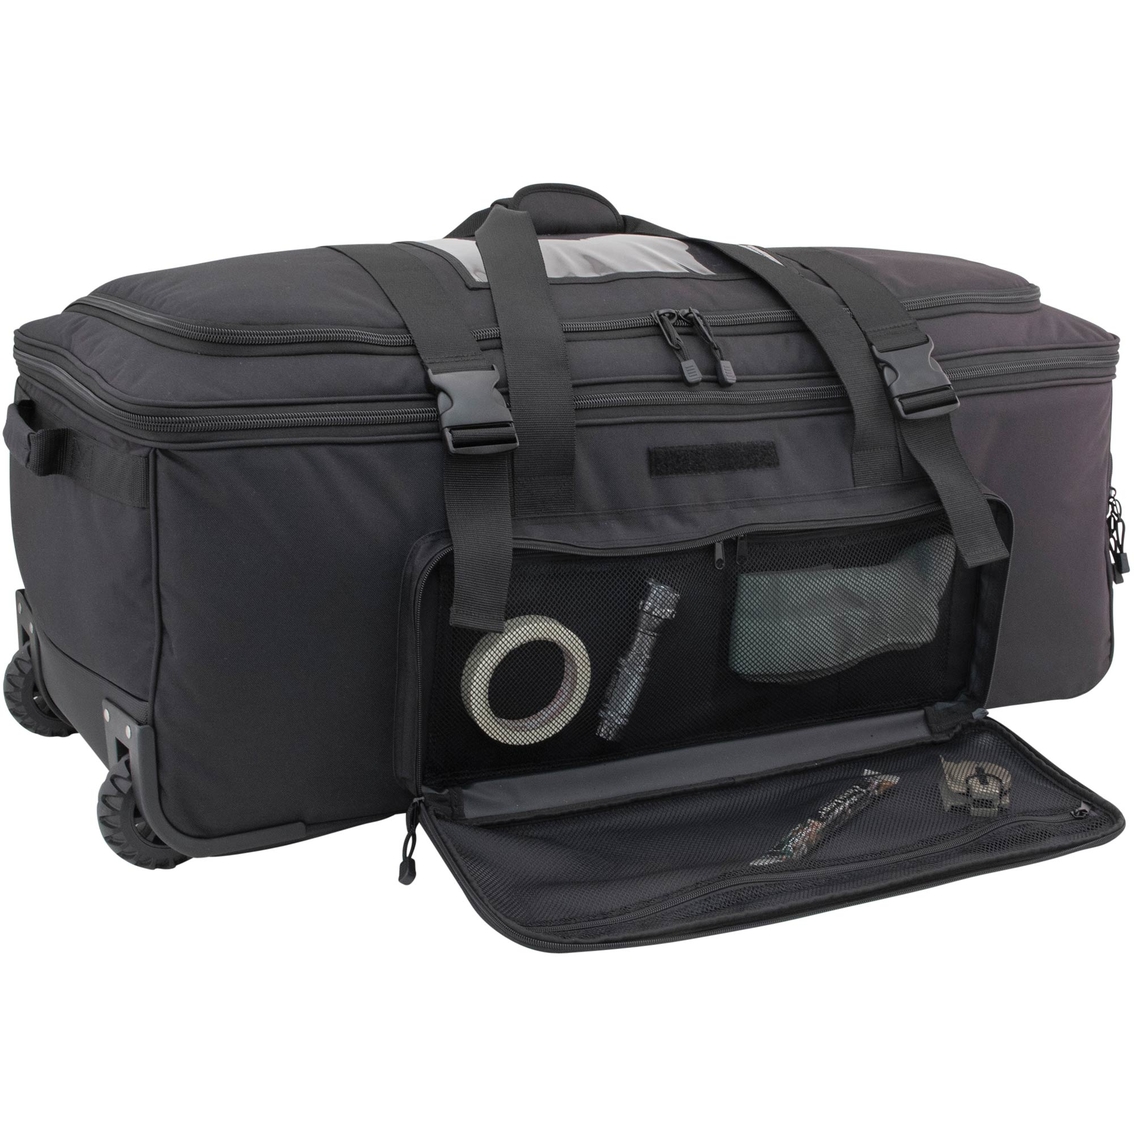 Mercury Tactical Gear Expandable Rolling Duffel Bag - Image 6 of 10